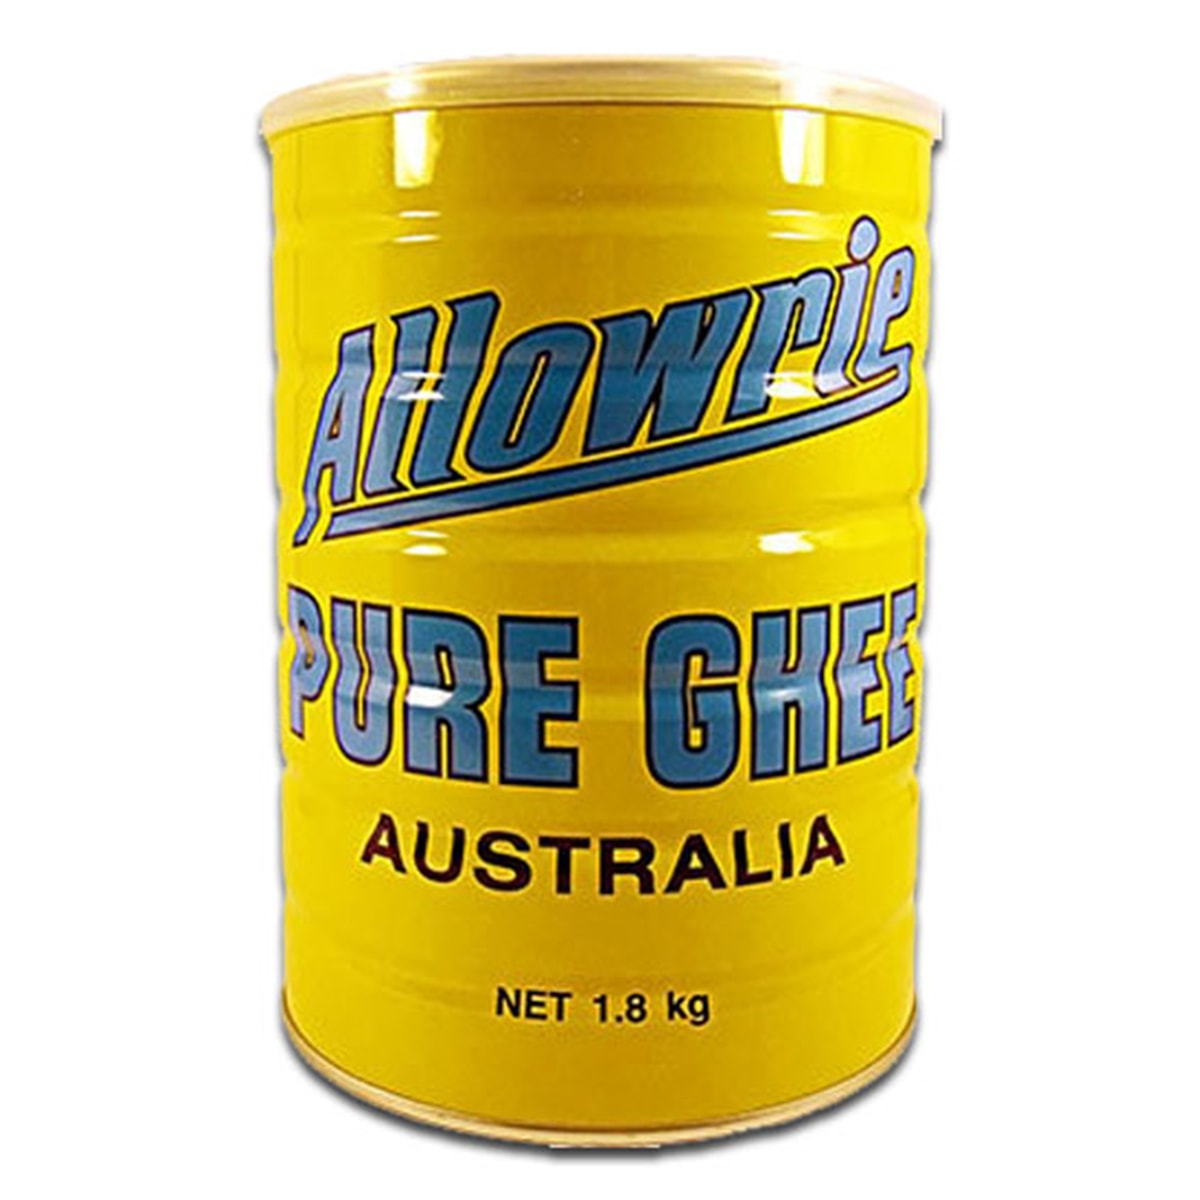 Buy Allowrie Pure Ghee (Clarified Butter) Australia - 1.8 kg